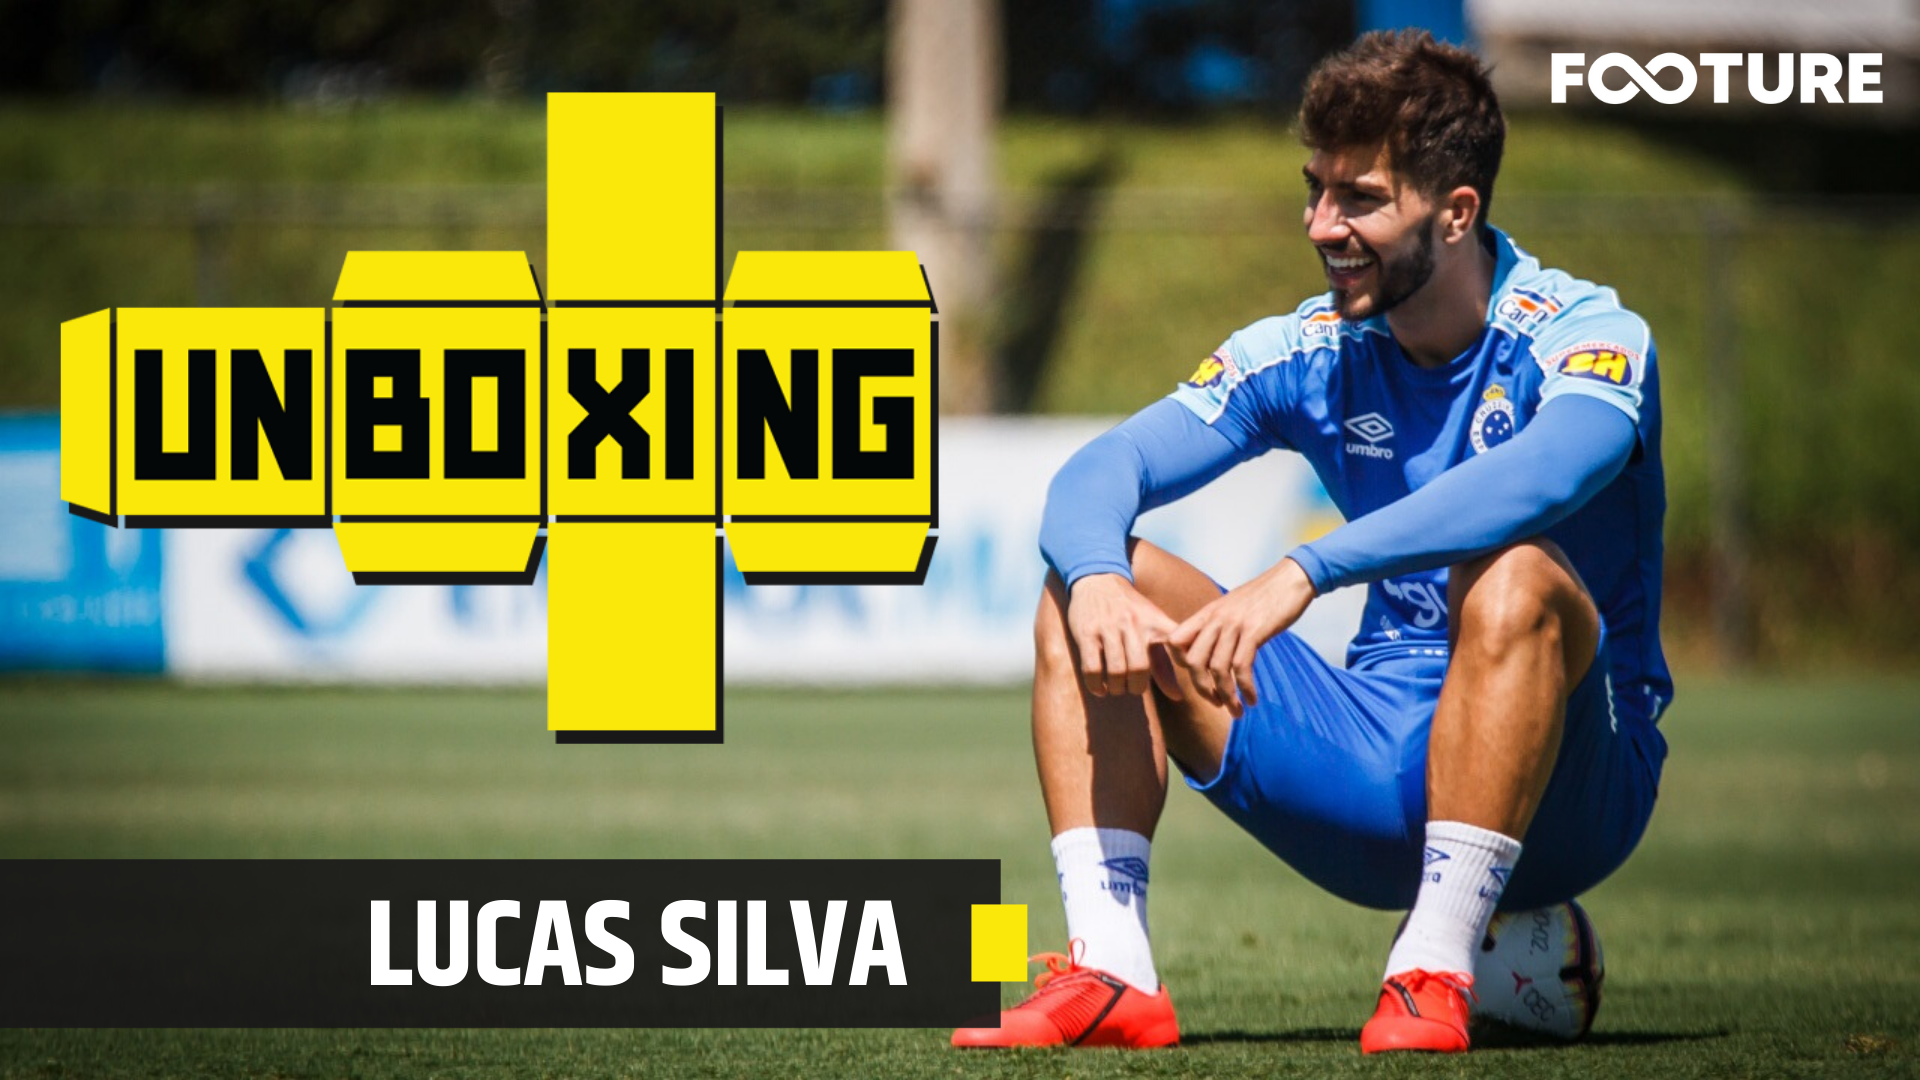 Unboxing #26 | Como joga Lucas Silva